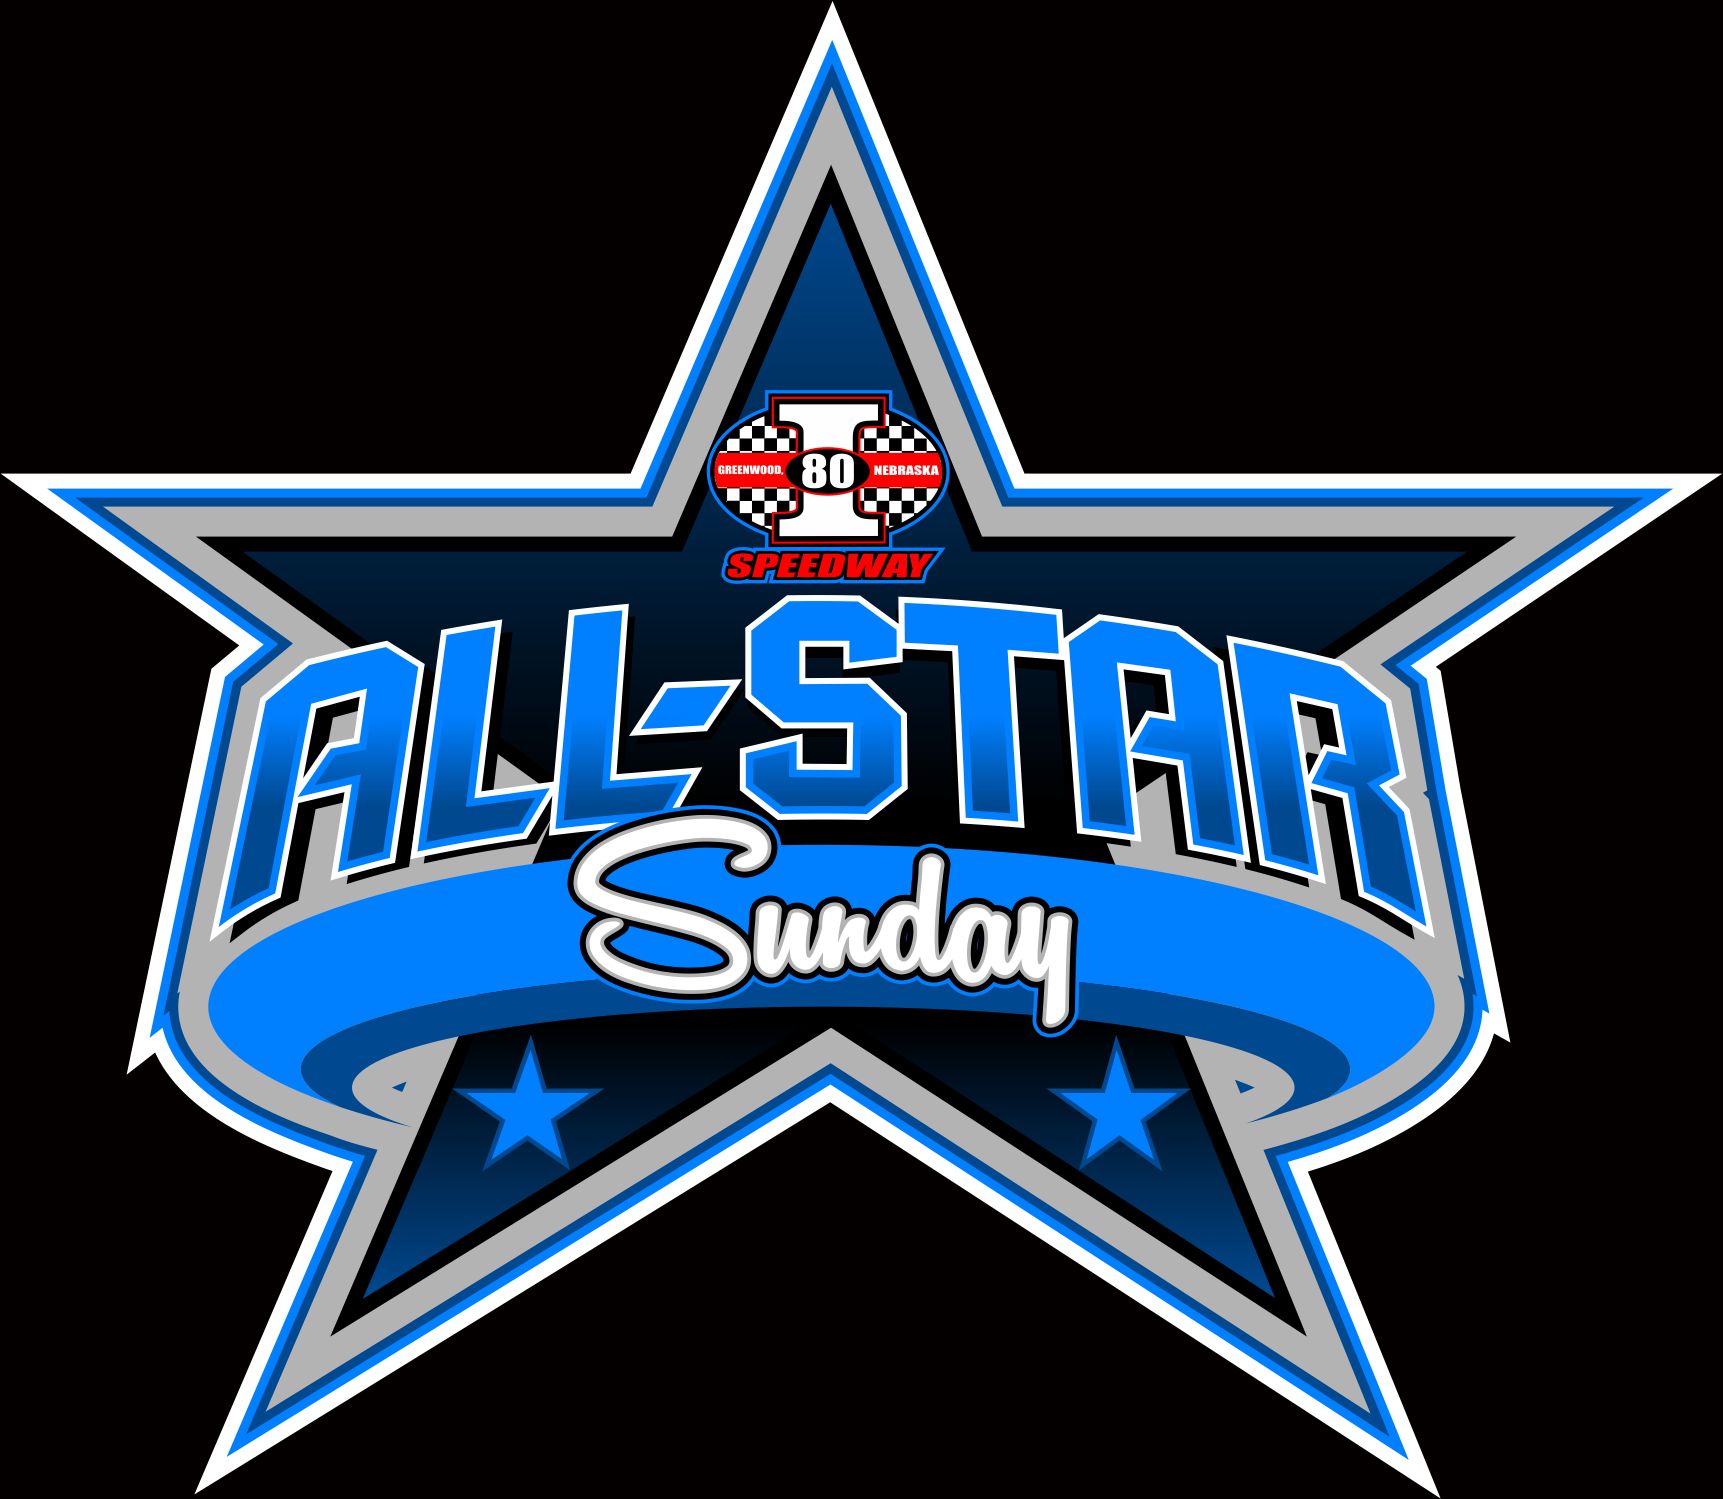 All Star Championship Sunday